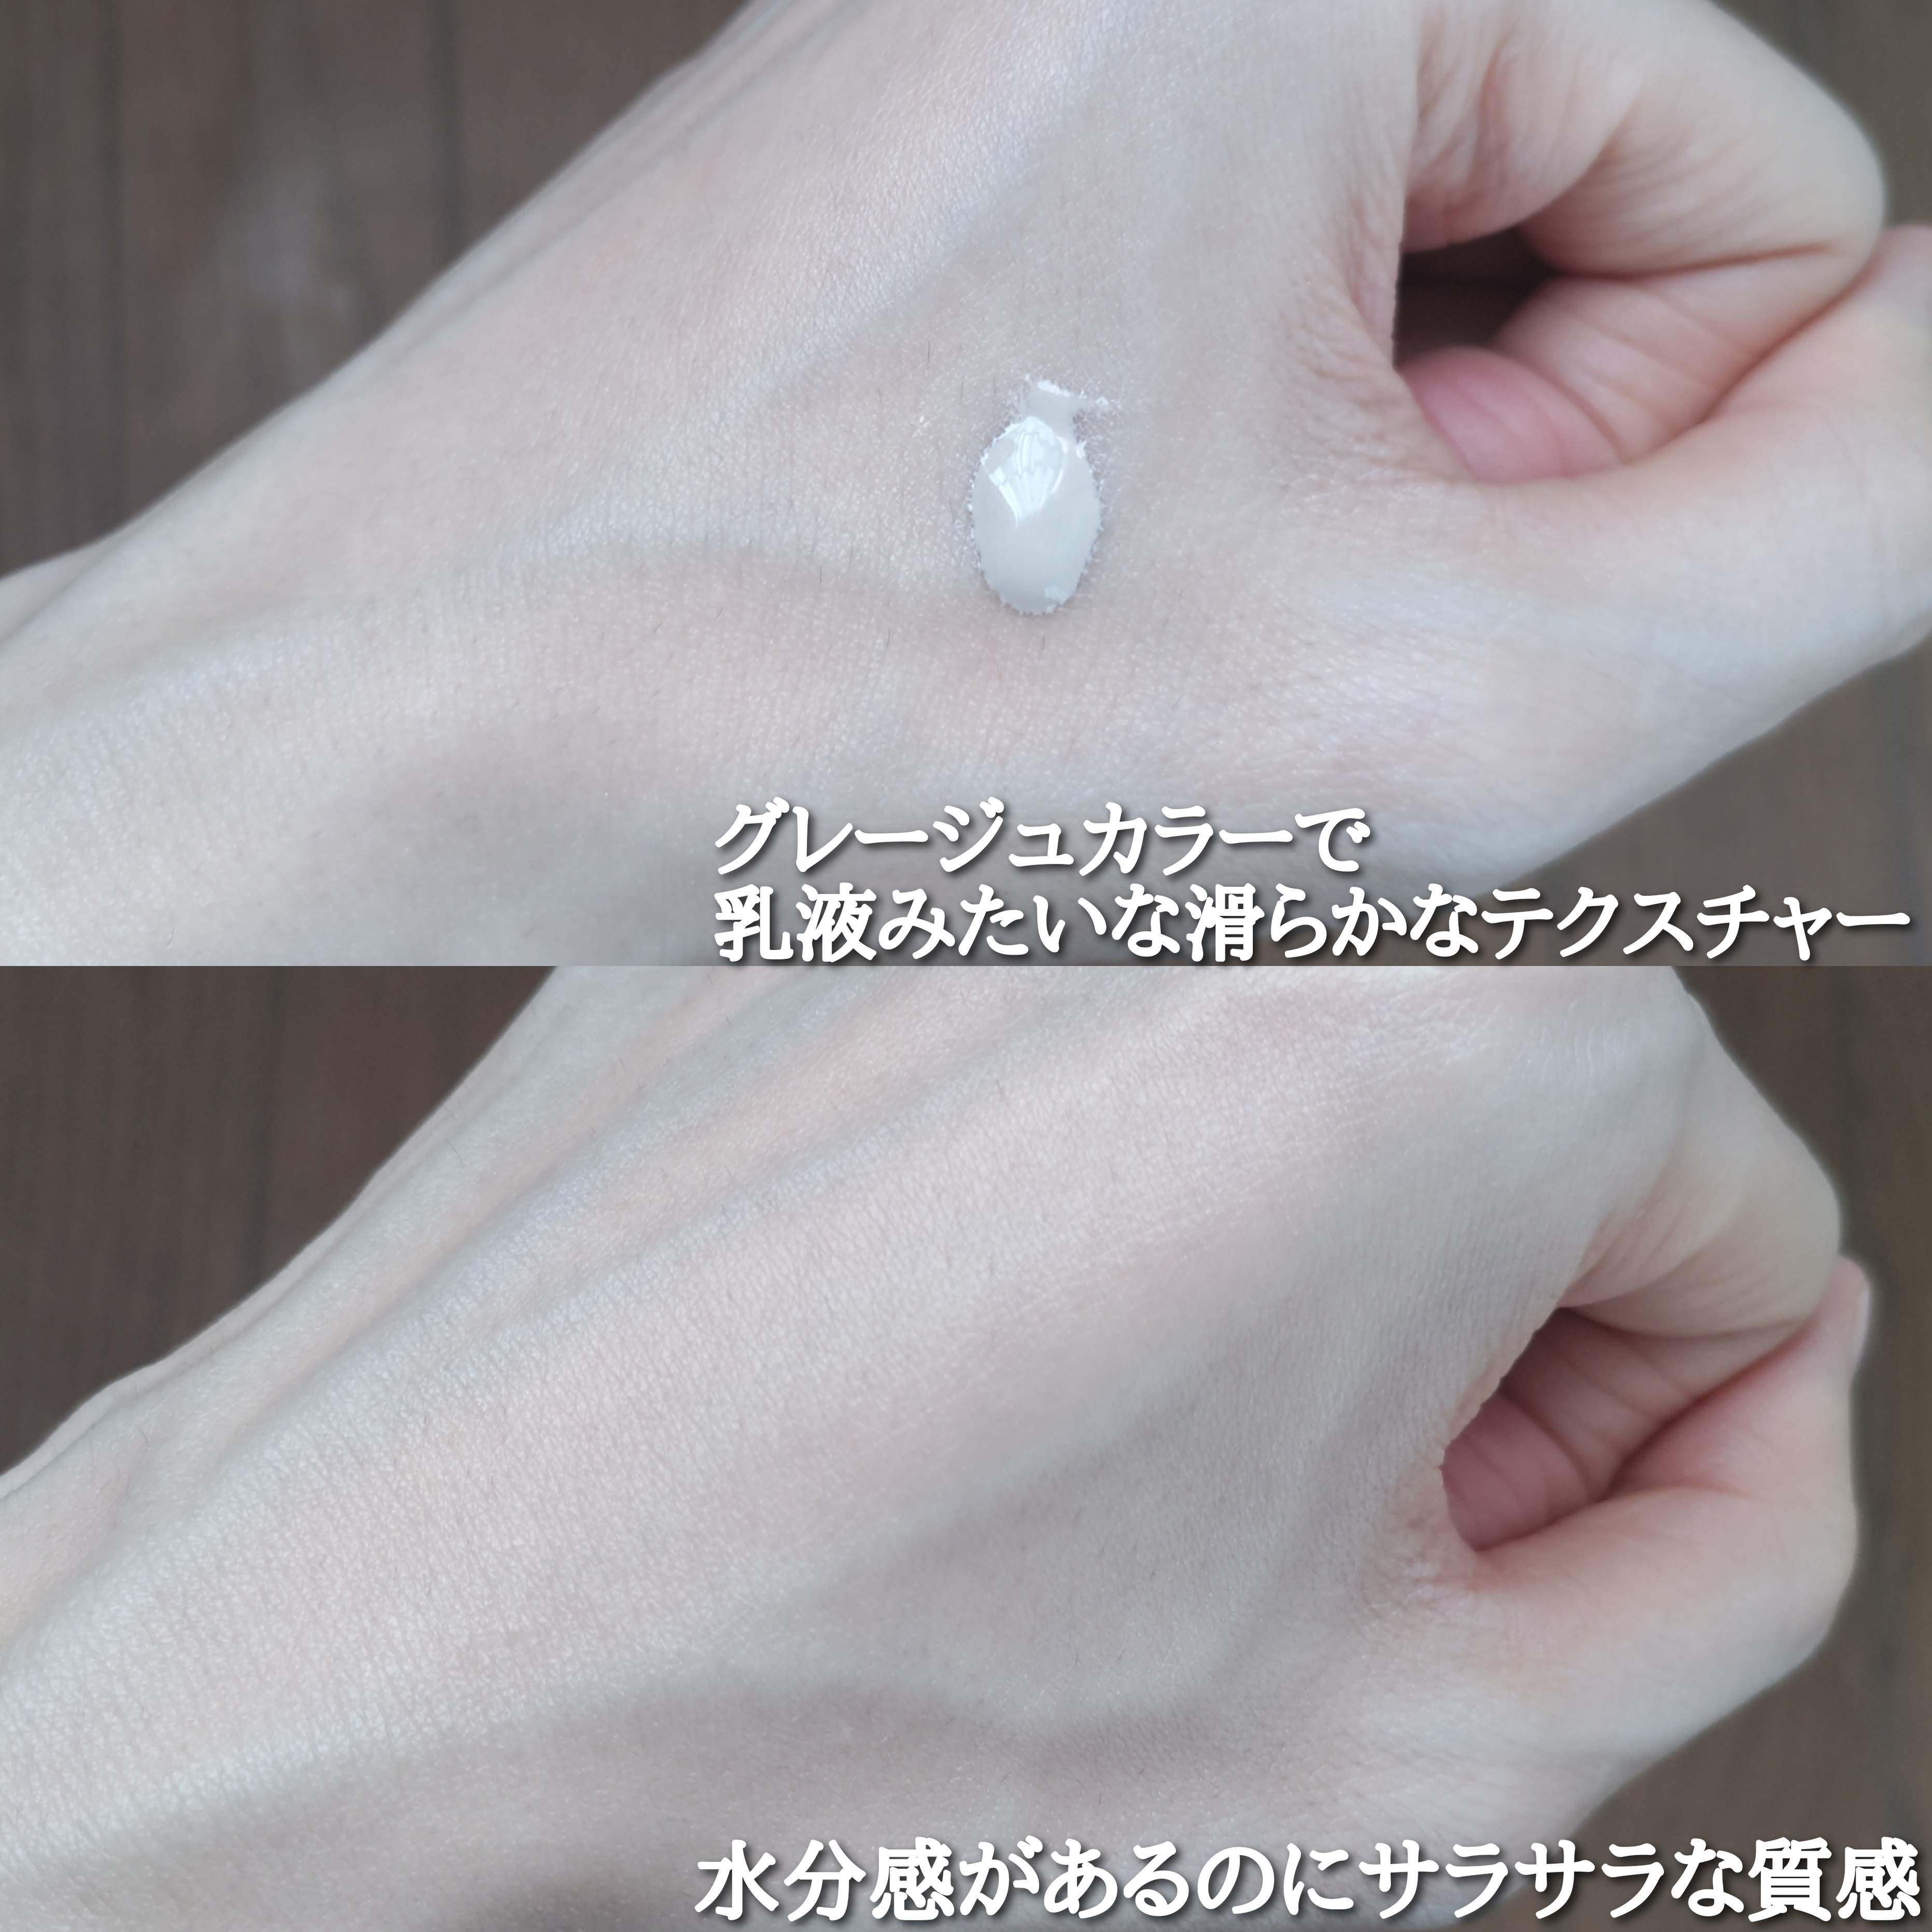 RACO キープスキンベース(皮脂崩れ防止)を使ったYuKaRi♡さんのクチコミ画像4